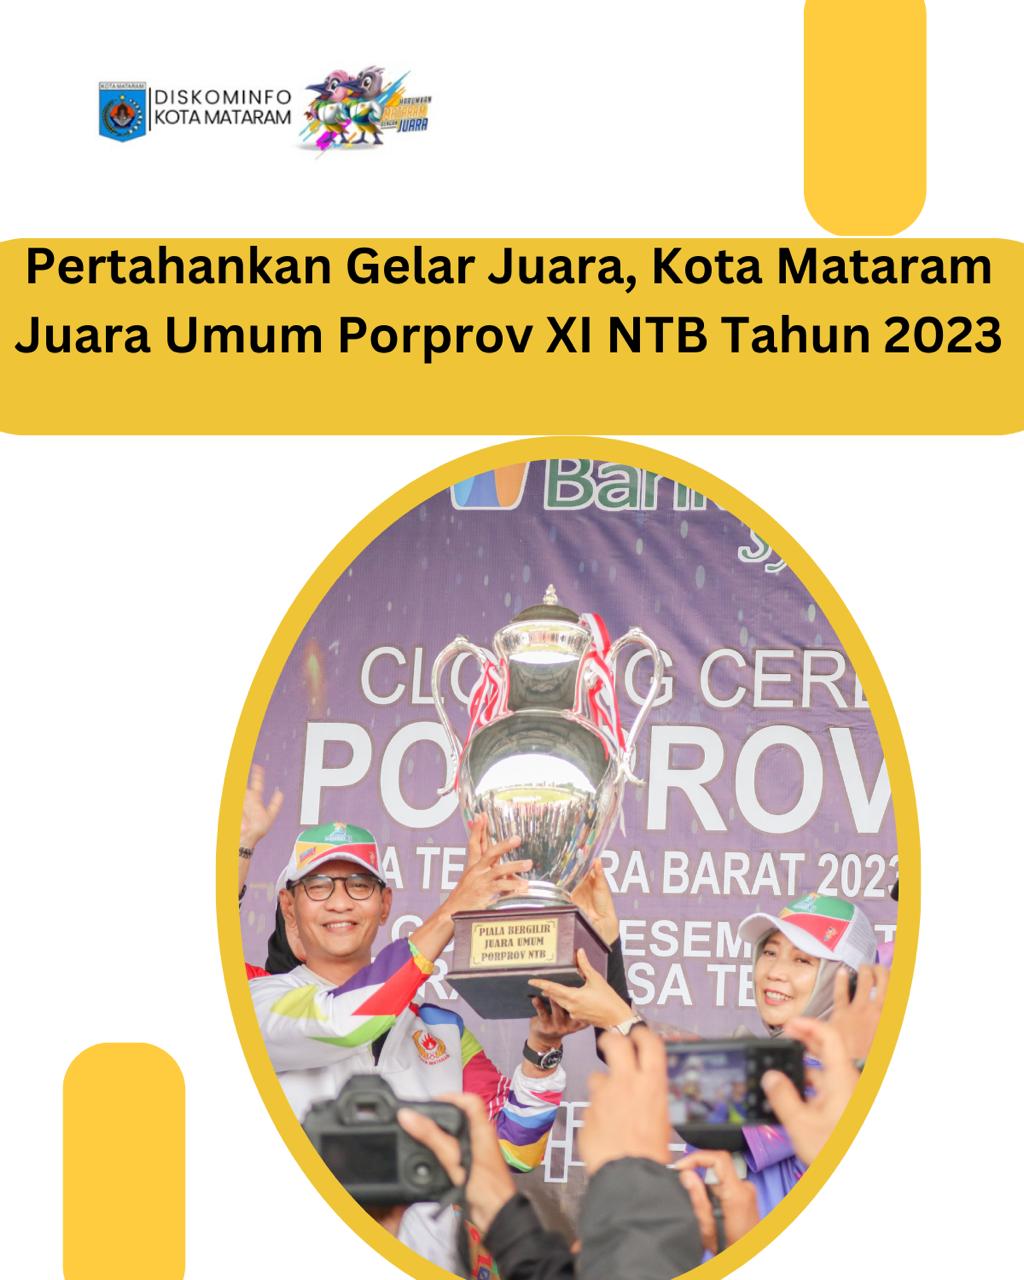 Pertahankan Gelar, Kota Mataram Juara Umum Porprov XI NTB Tahun 2023